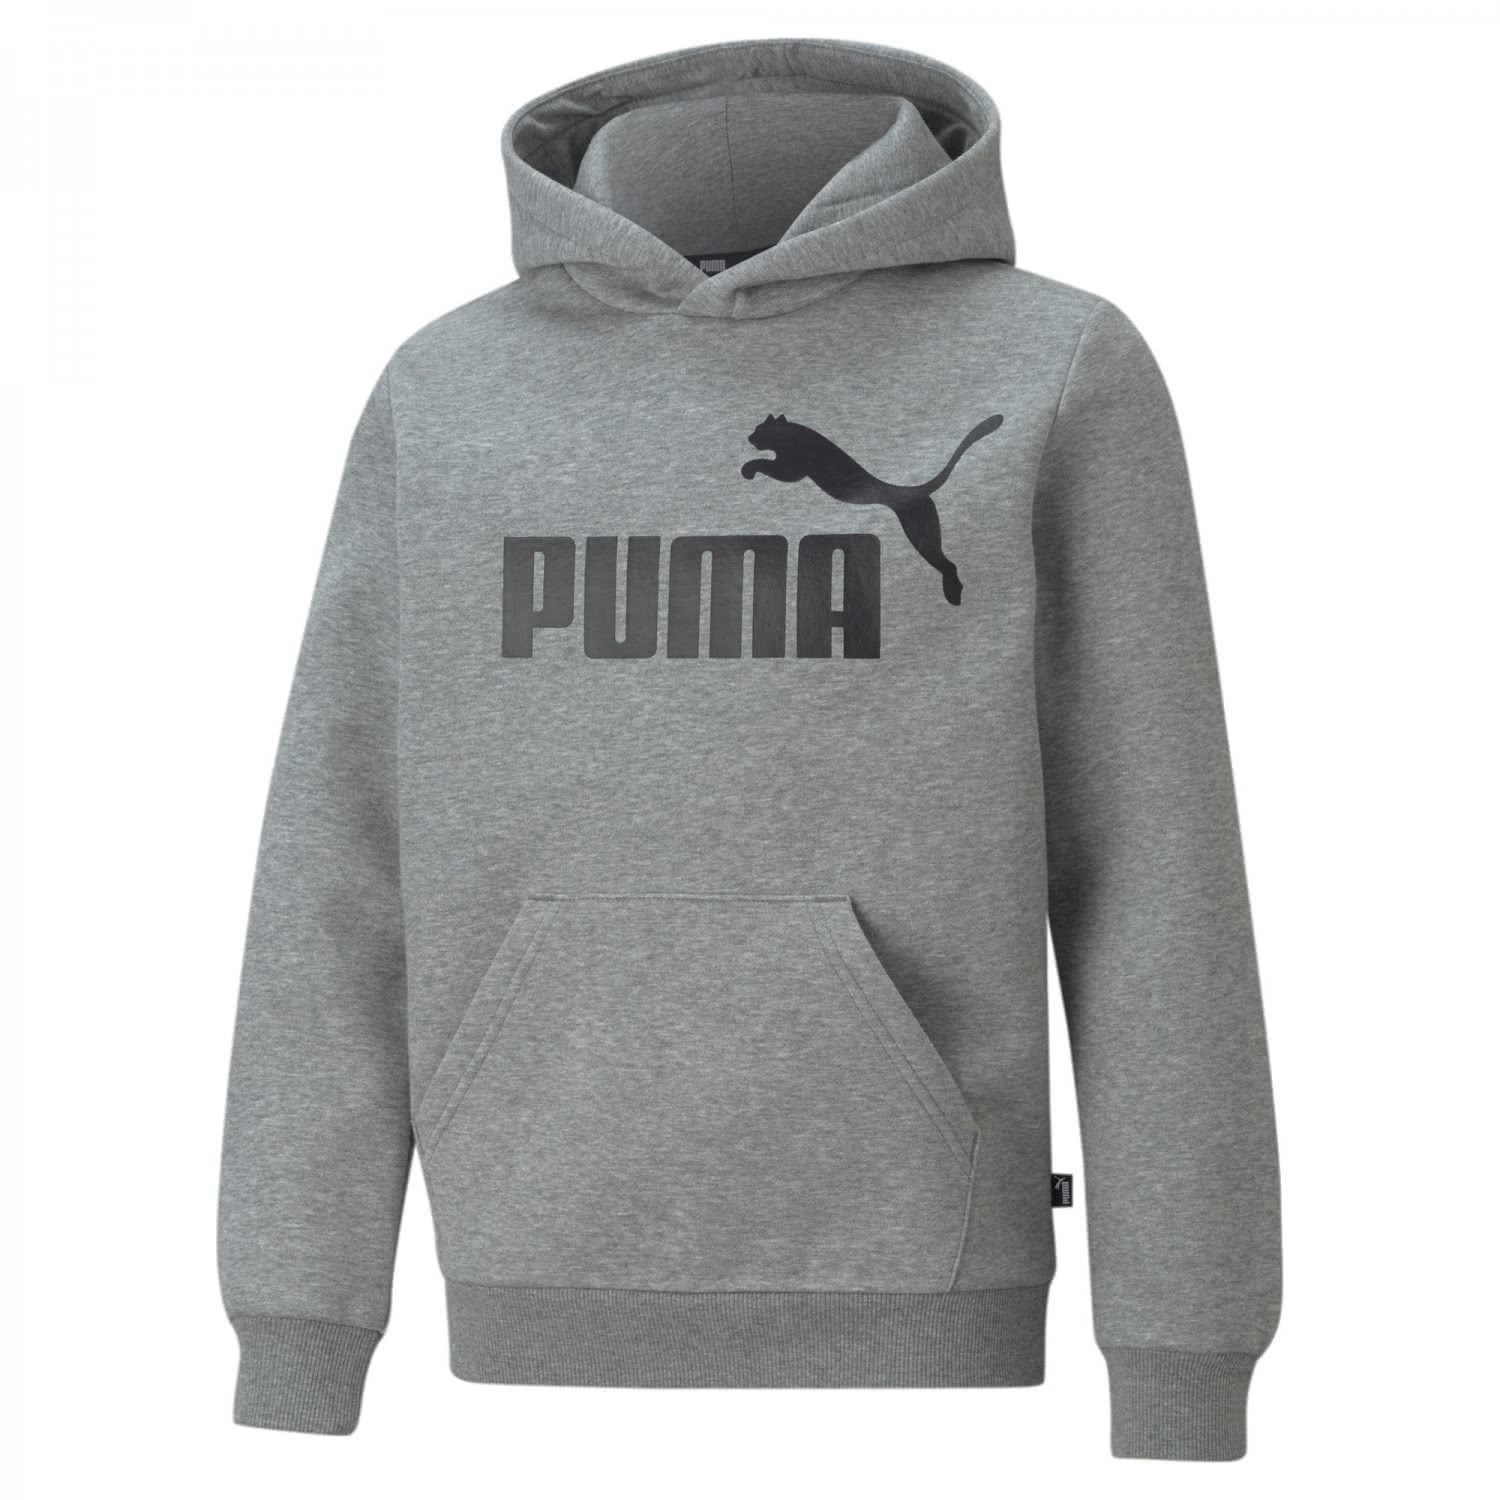 Puma Kinder Kapuzenpullover Ess Big Logo 586965 | eBay